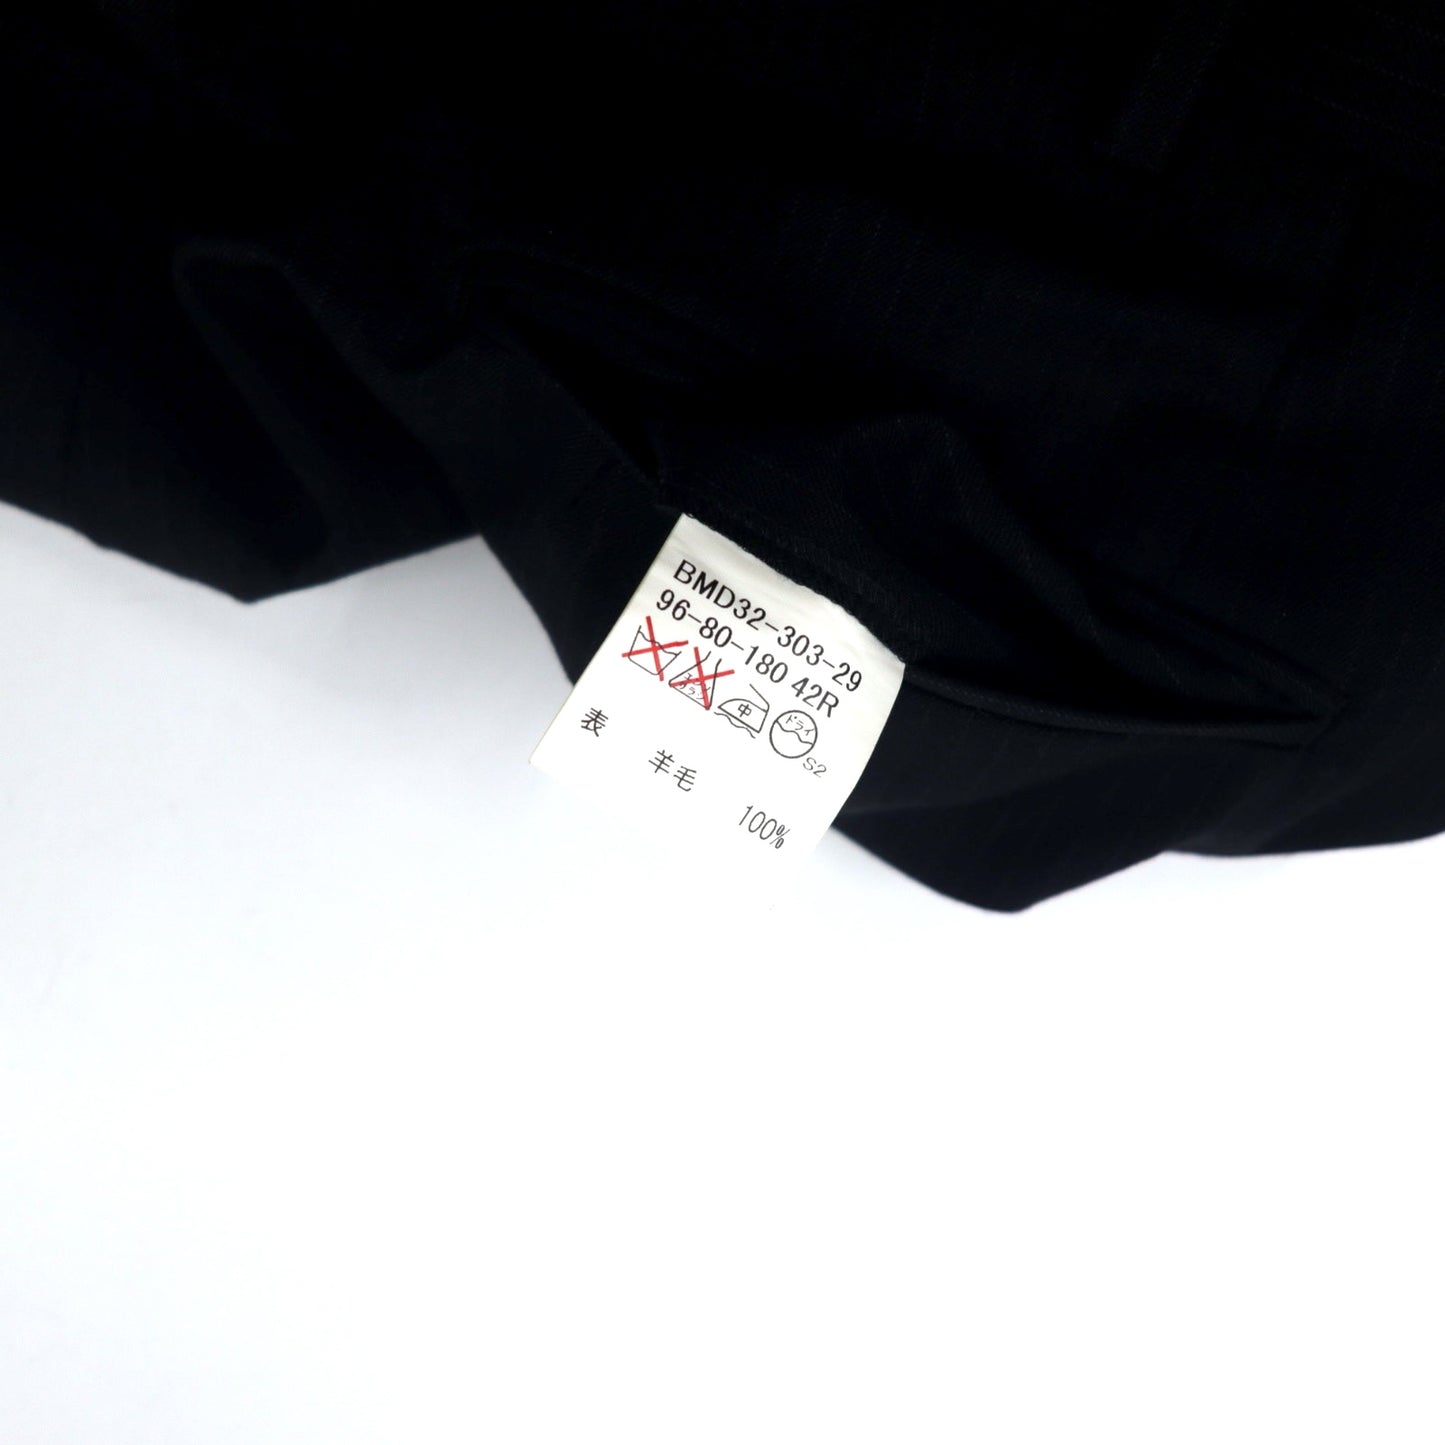 BURBERRY BLACK LABEL 3B スーツ セットアップ 42R ブラック ストライプ ウール SUPER 100's 羊毛 日本製